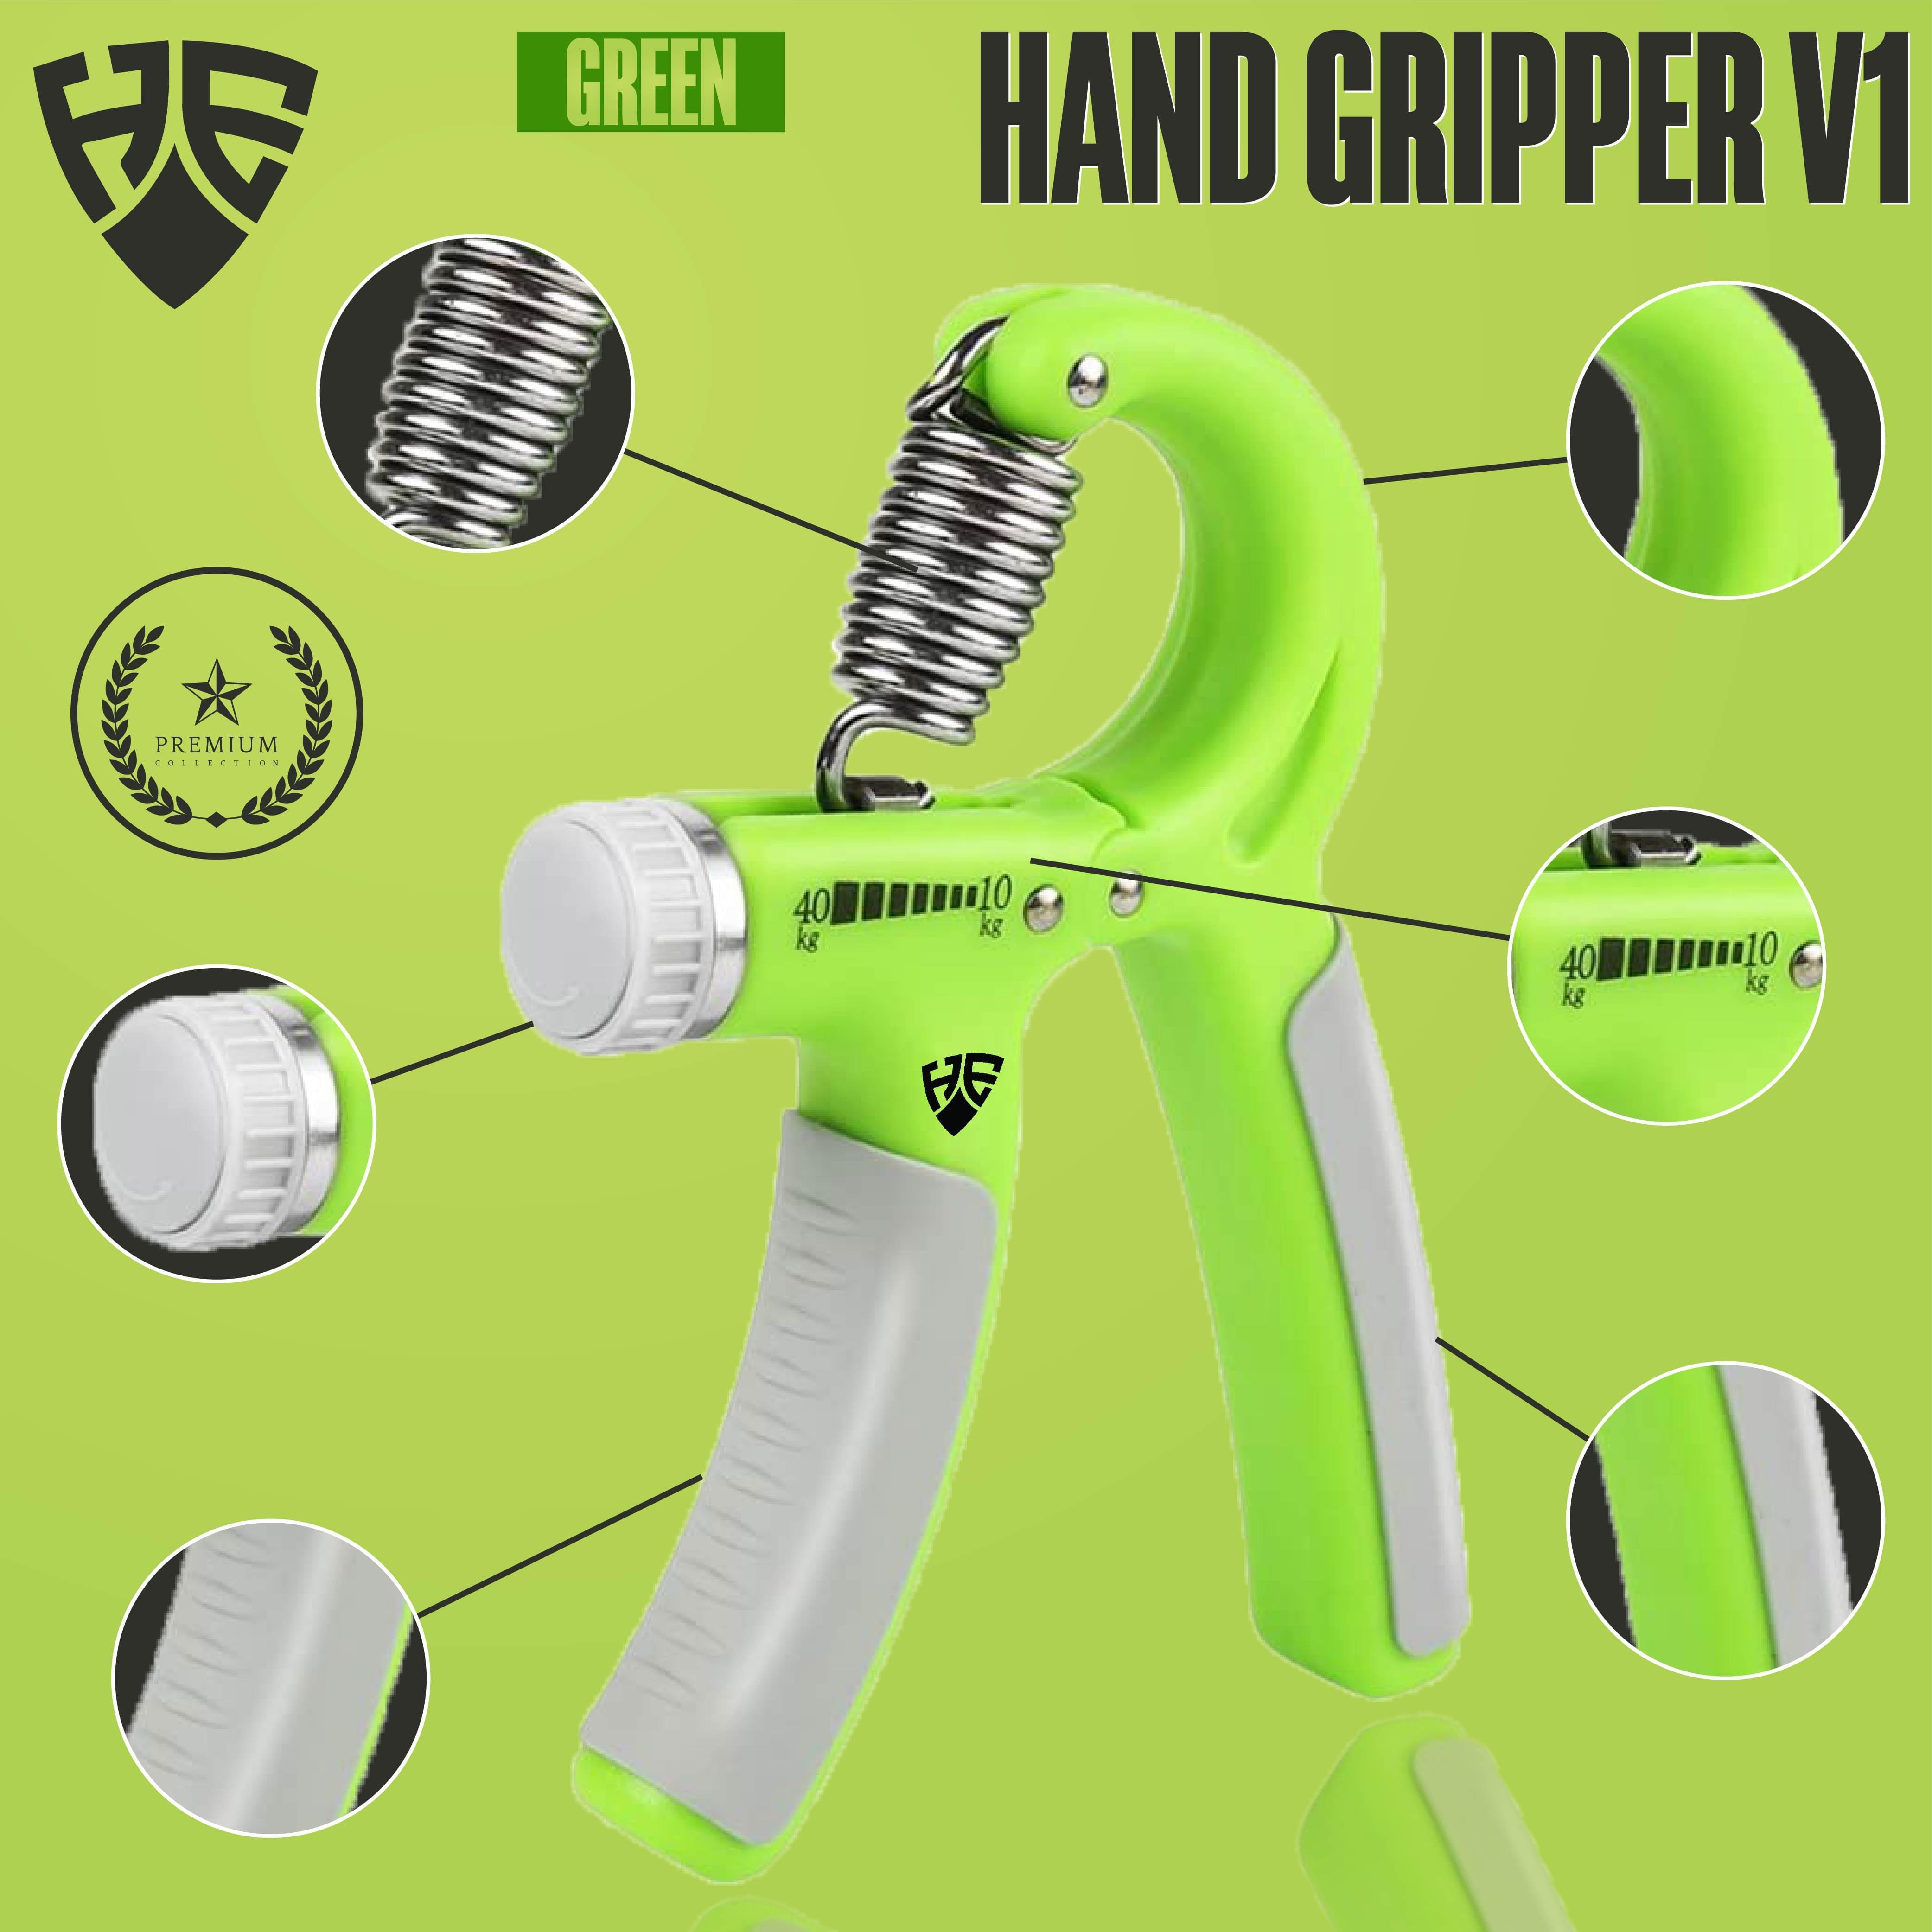 Adjustable Hand Grip Exerciser